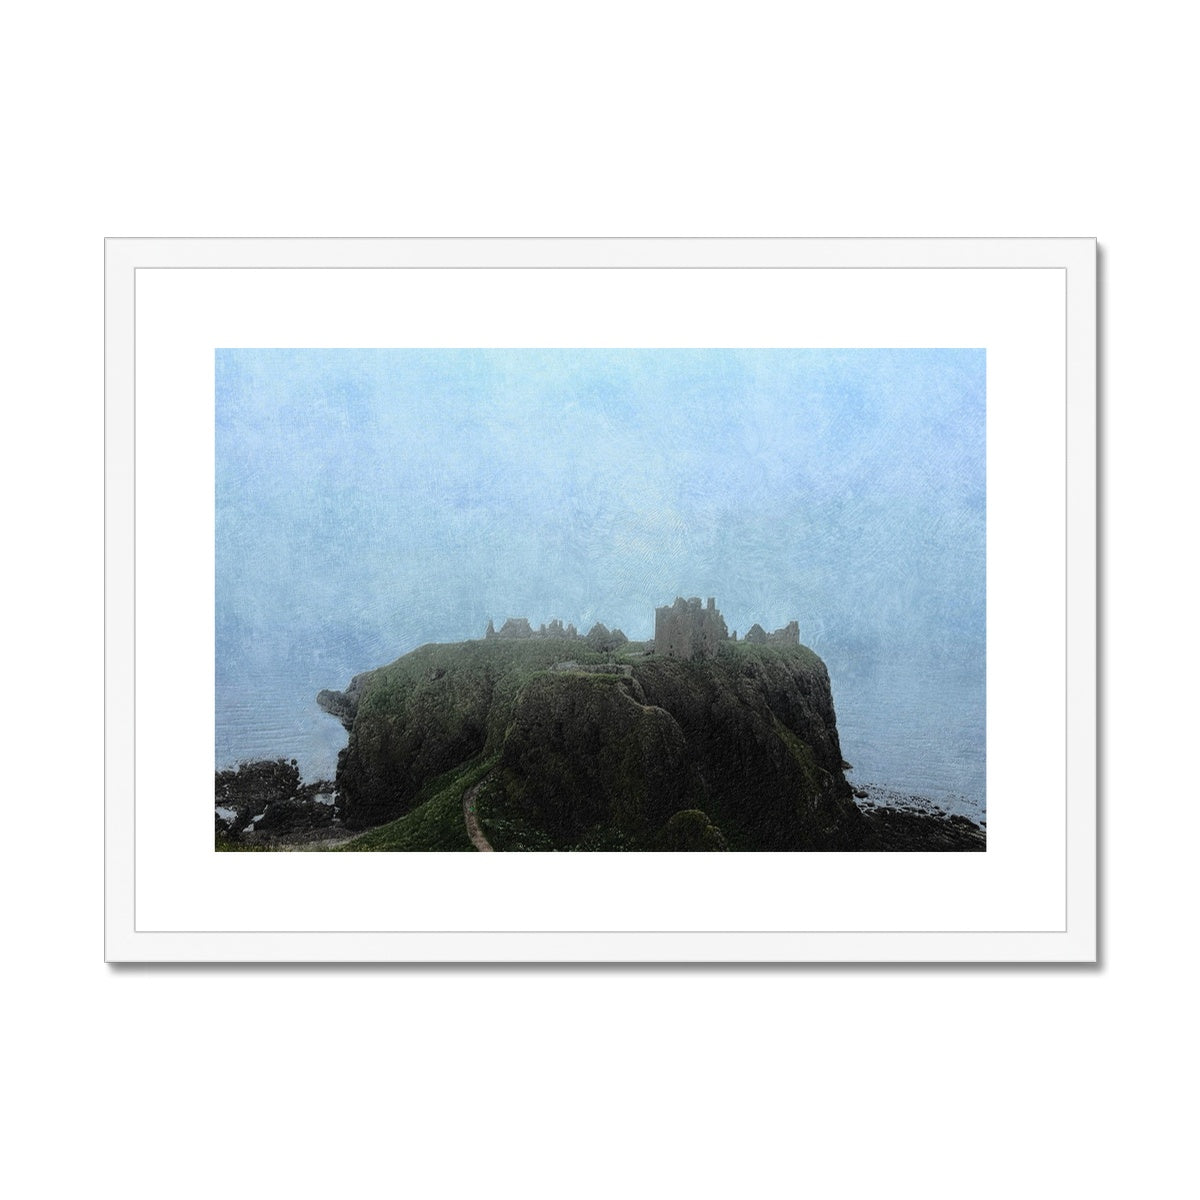 Dunnottar Castle Mist Painting | Framed & Mounted Prints From Scotland-Framed & Mounted Prints-Scottish Castles Art Gallery-A2 Landscape-White Frame-Paintings, Prints, Homeware, Art Gifts From Scotland By Scottish Artist Kevin Hunter